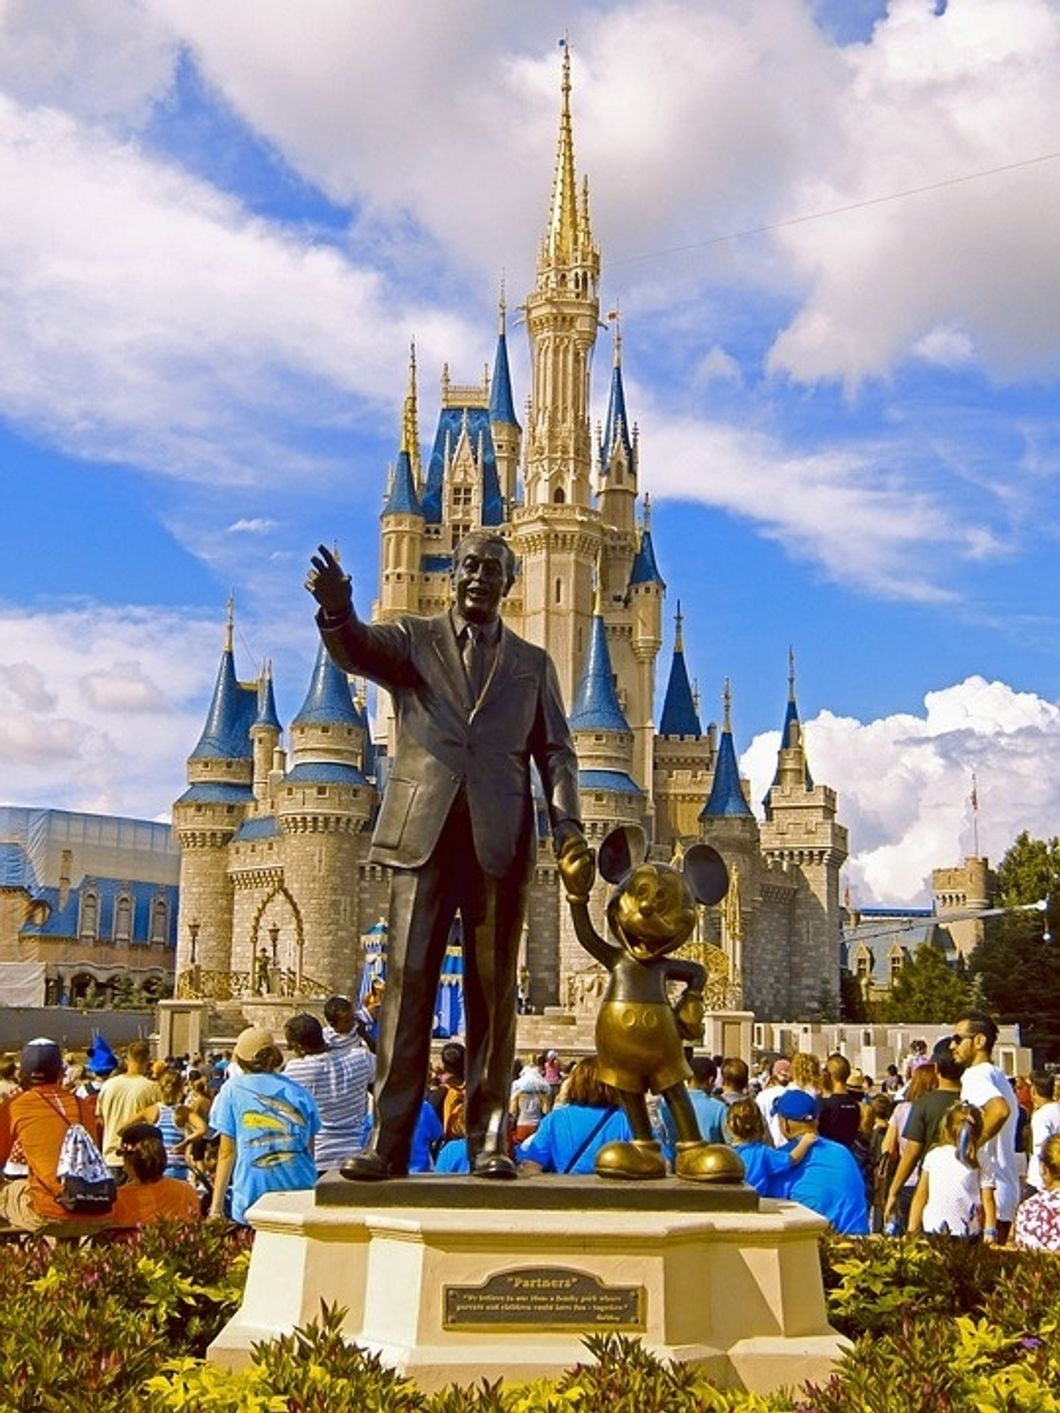 https://www.maxpixel.net/Kingdom-Magic-Landmark-Florida-Orlando-Disney-1043604